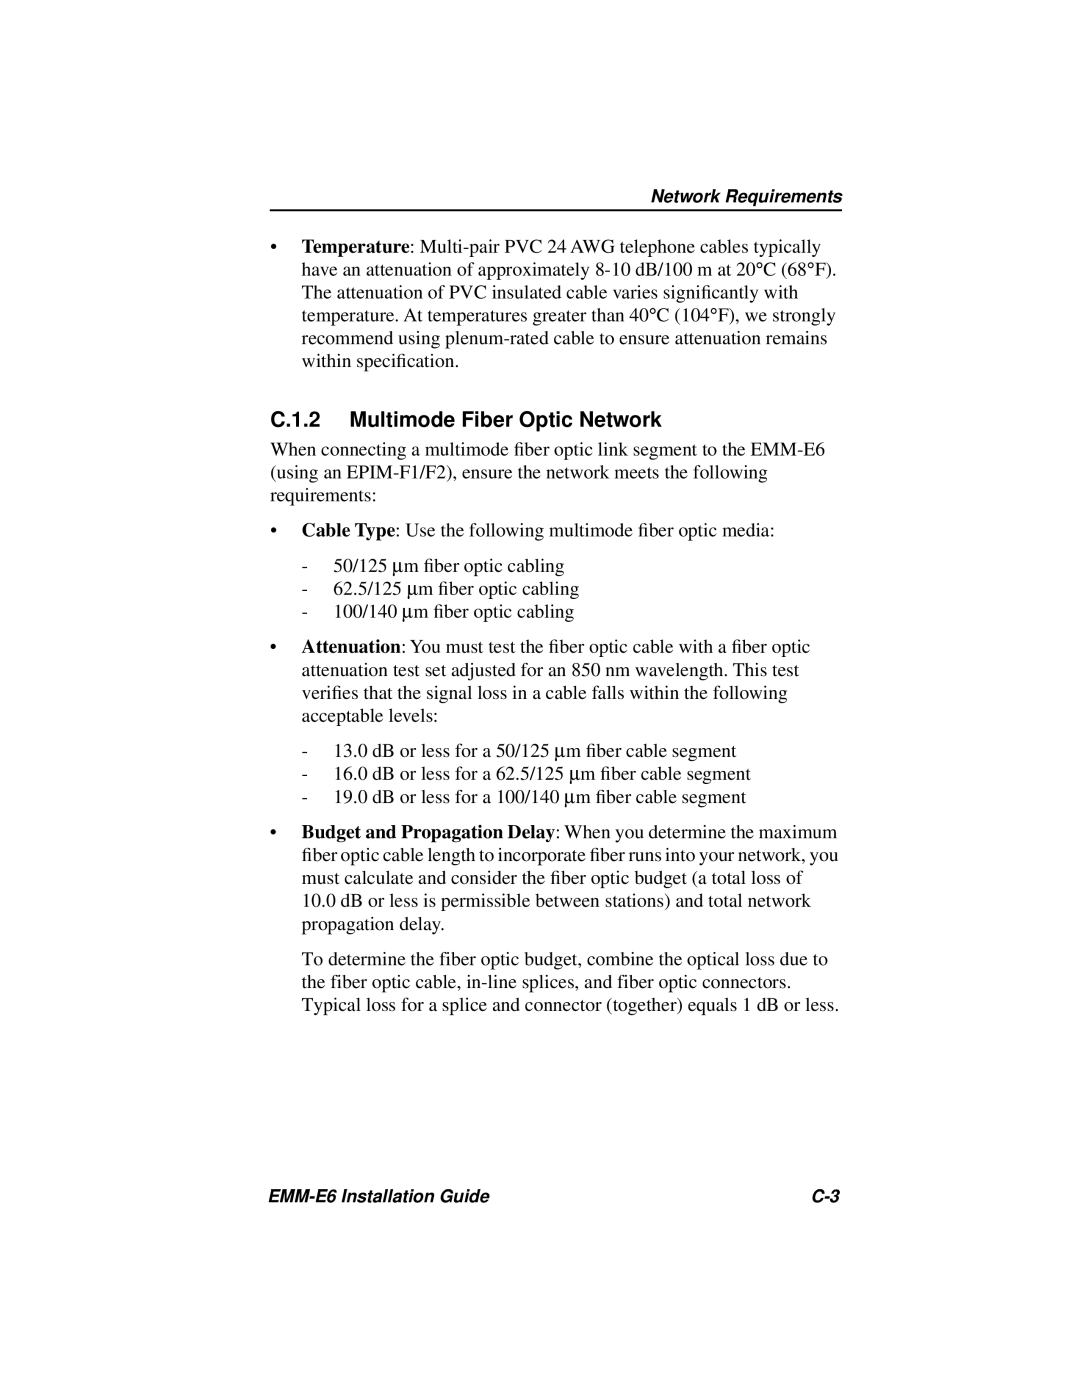 Cabletron Systems EMM-E6 manual C.1.2 Multimode Fiber Optic Network 